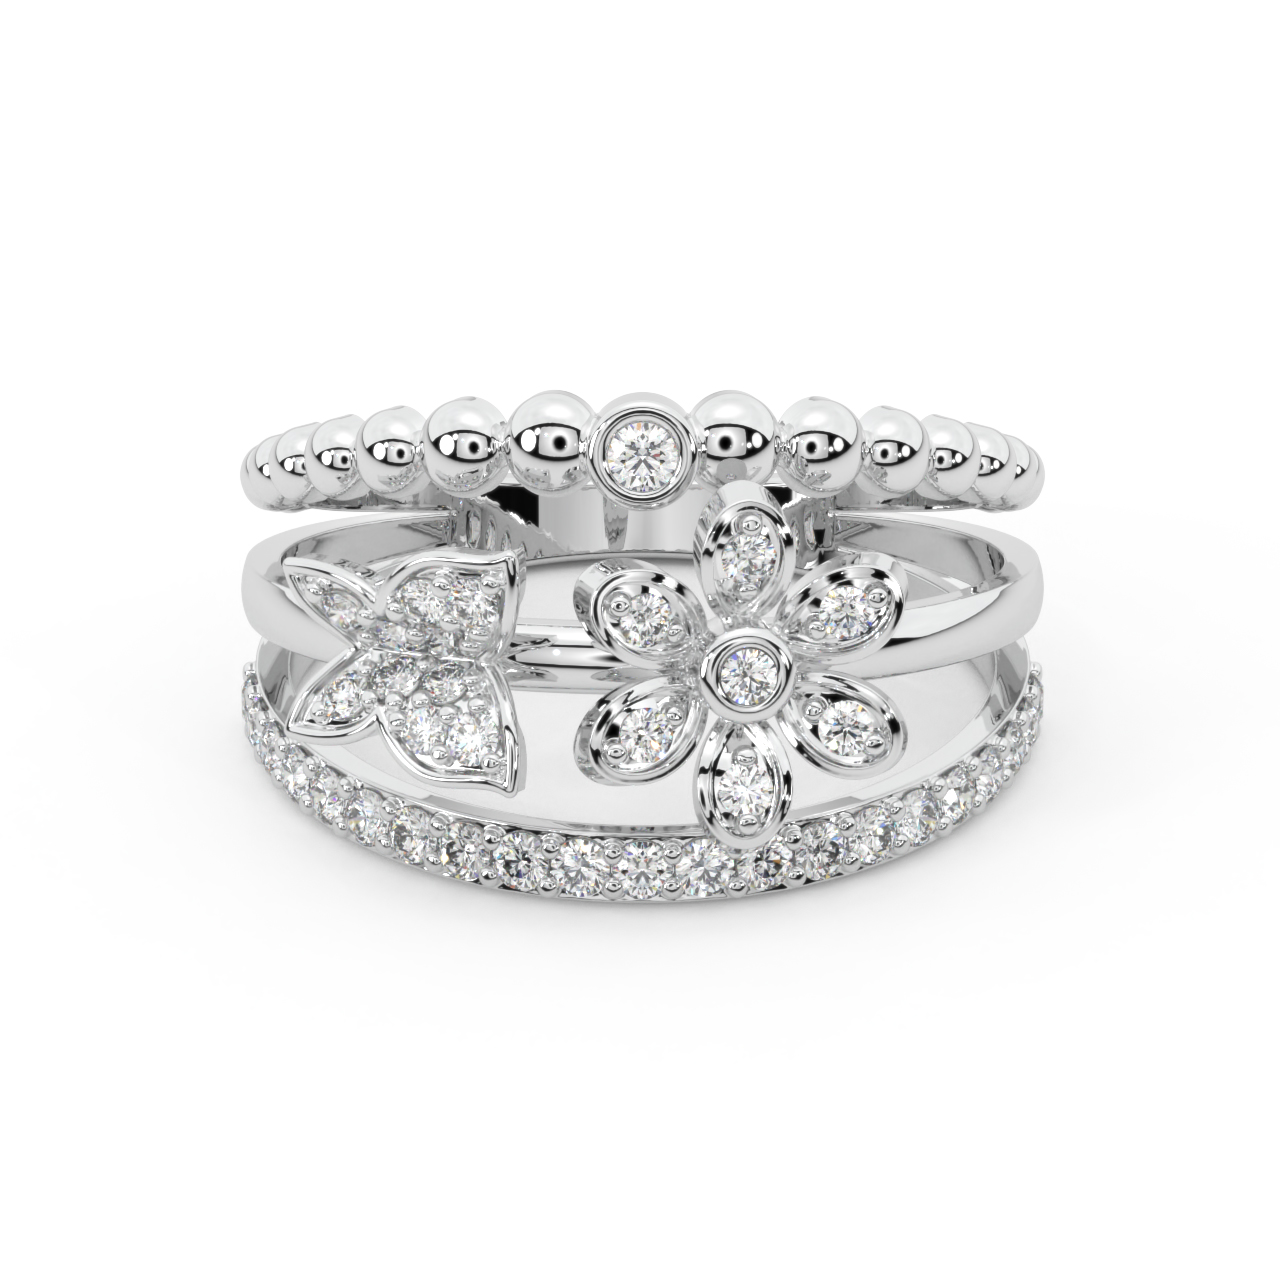 Fab & Floral Diamond Ring